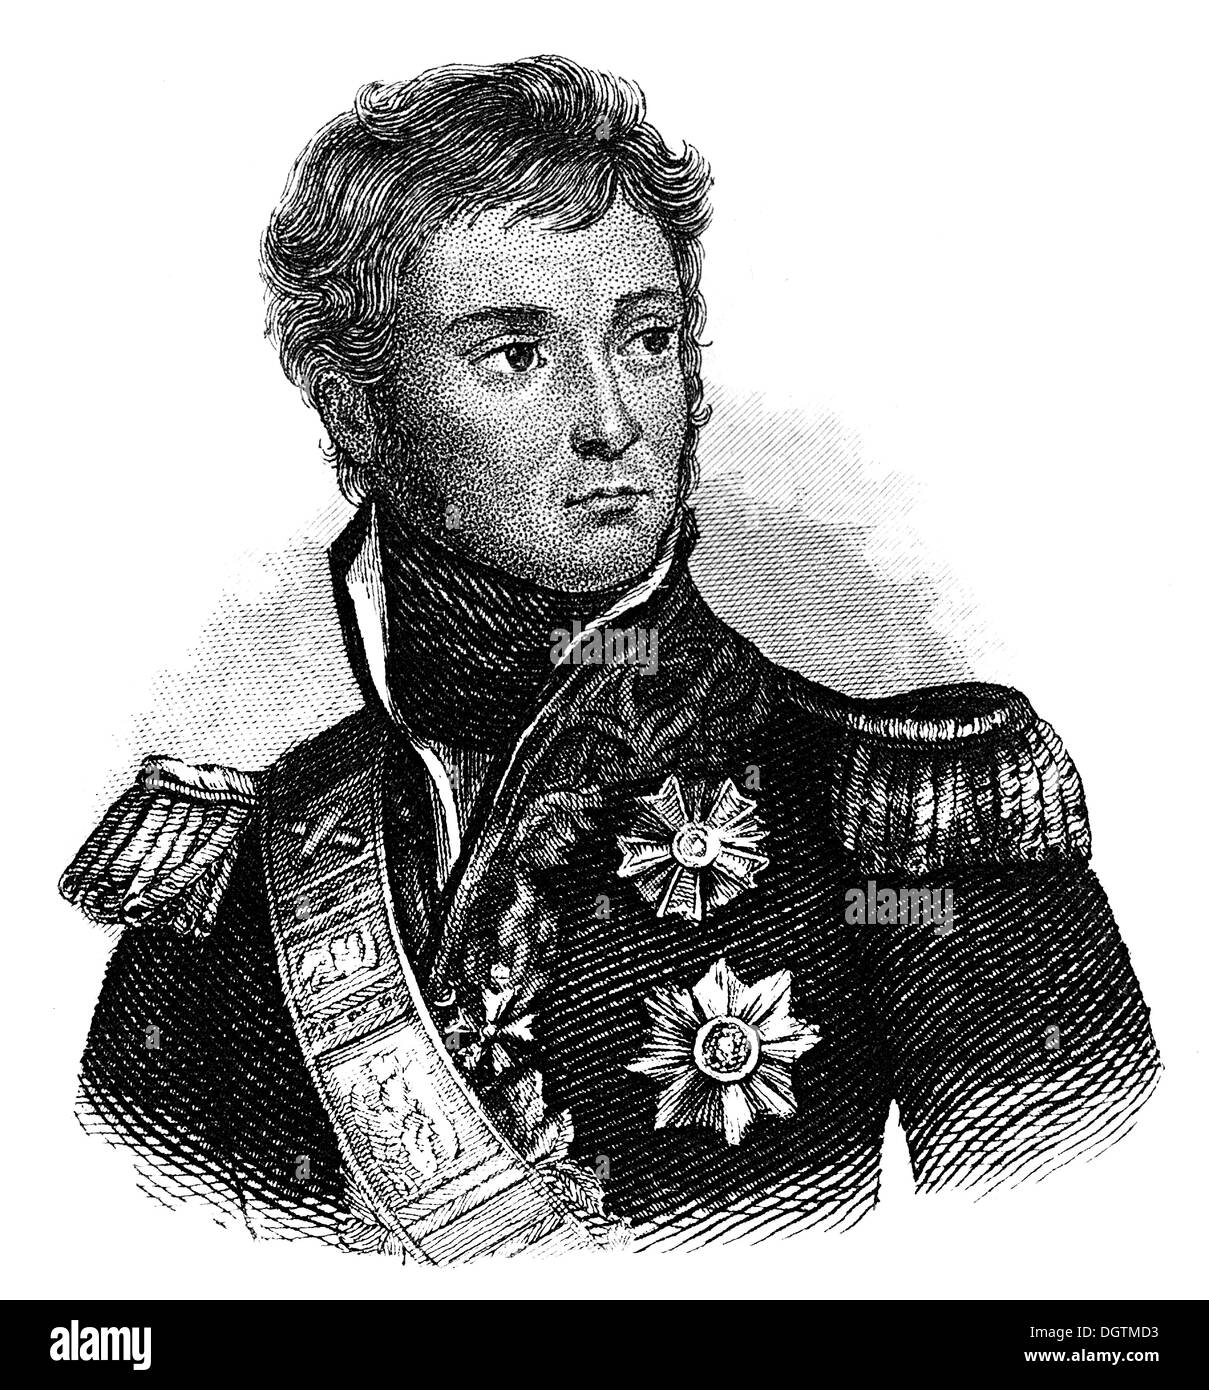 Jean Lannes, 1. Duc de Montebello, 1769-1809, Marschall des Reiches, Prince de Sievers, Duc de Montebello Stockfoto